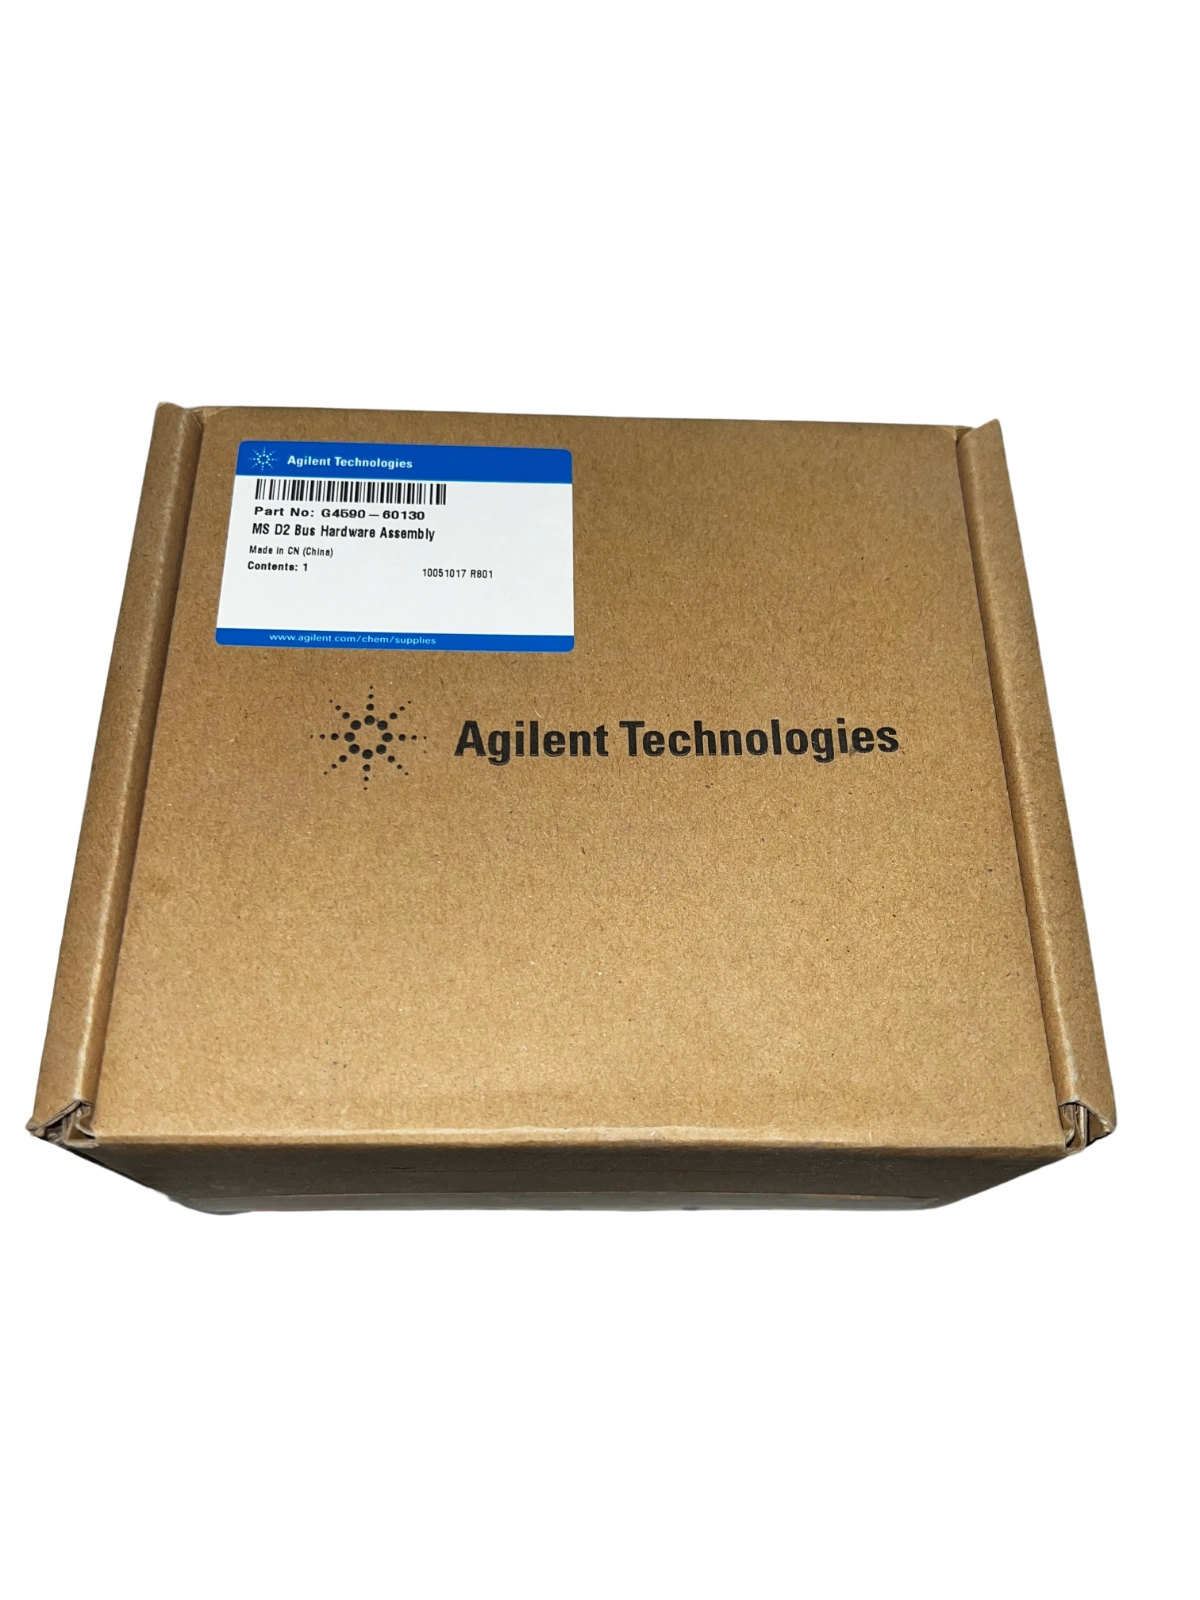 Agilent G4590-60130 MS D2 Bus Hardware Assembly